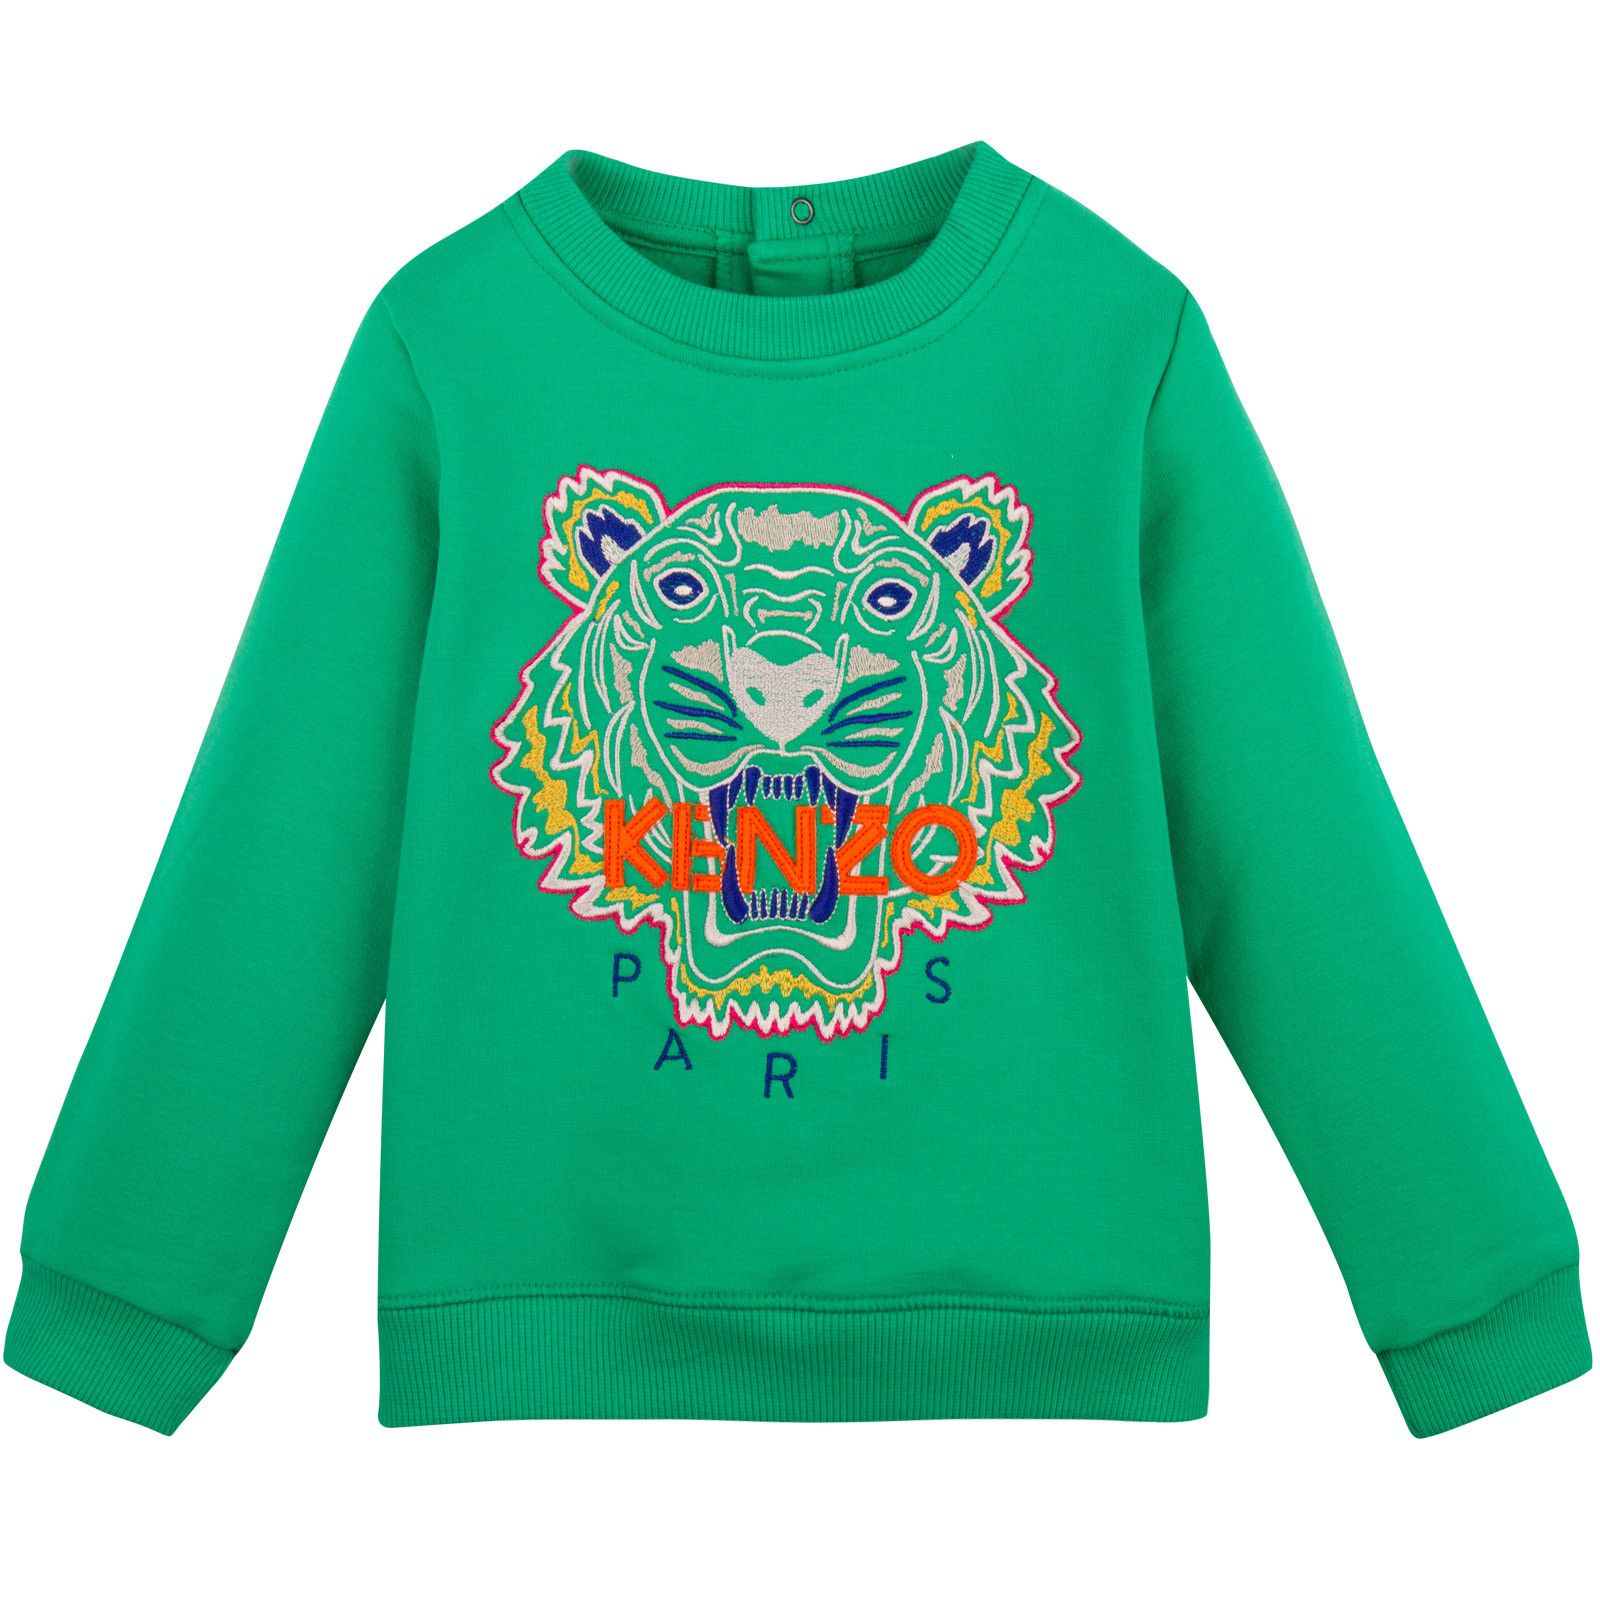 Baby Green Tiger Embroidered Sweatshirt - CÉMAROSE | Children's Fashion Store - 1